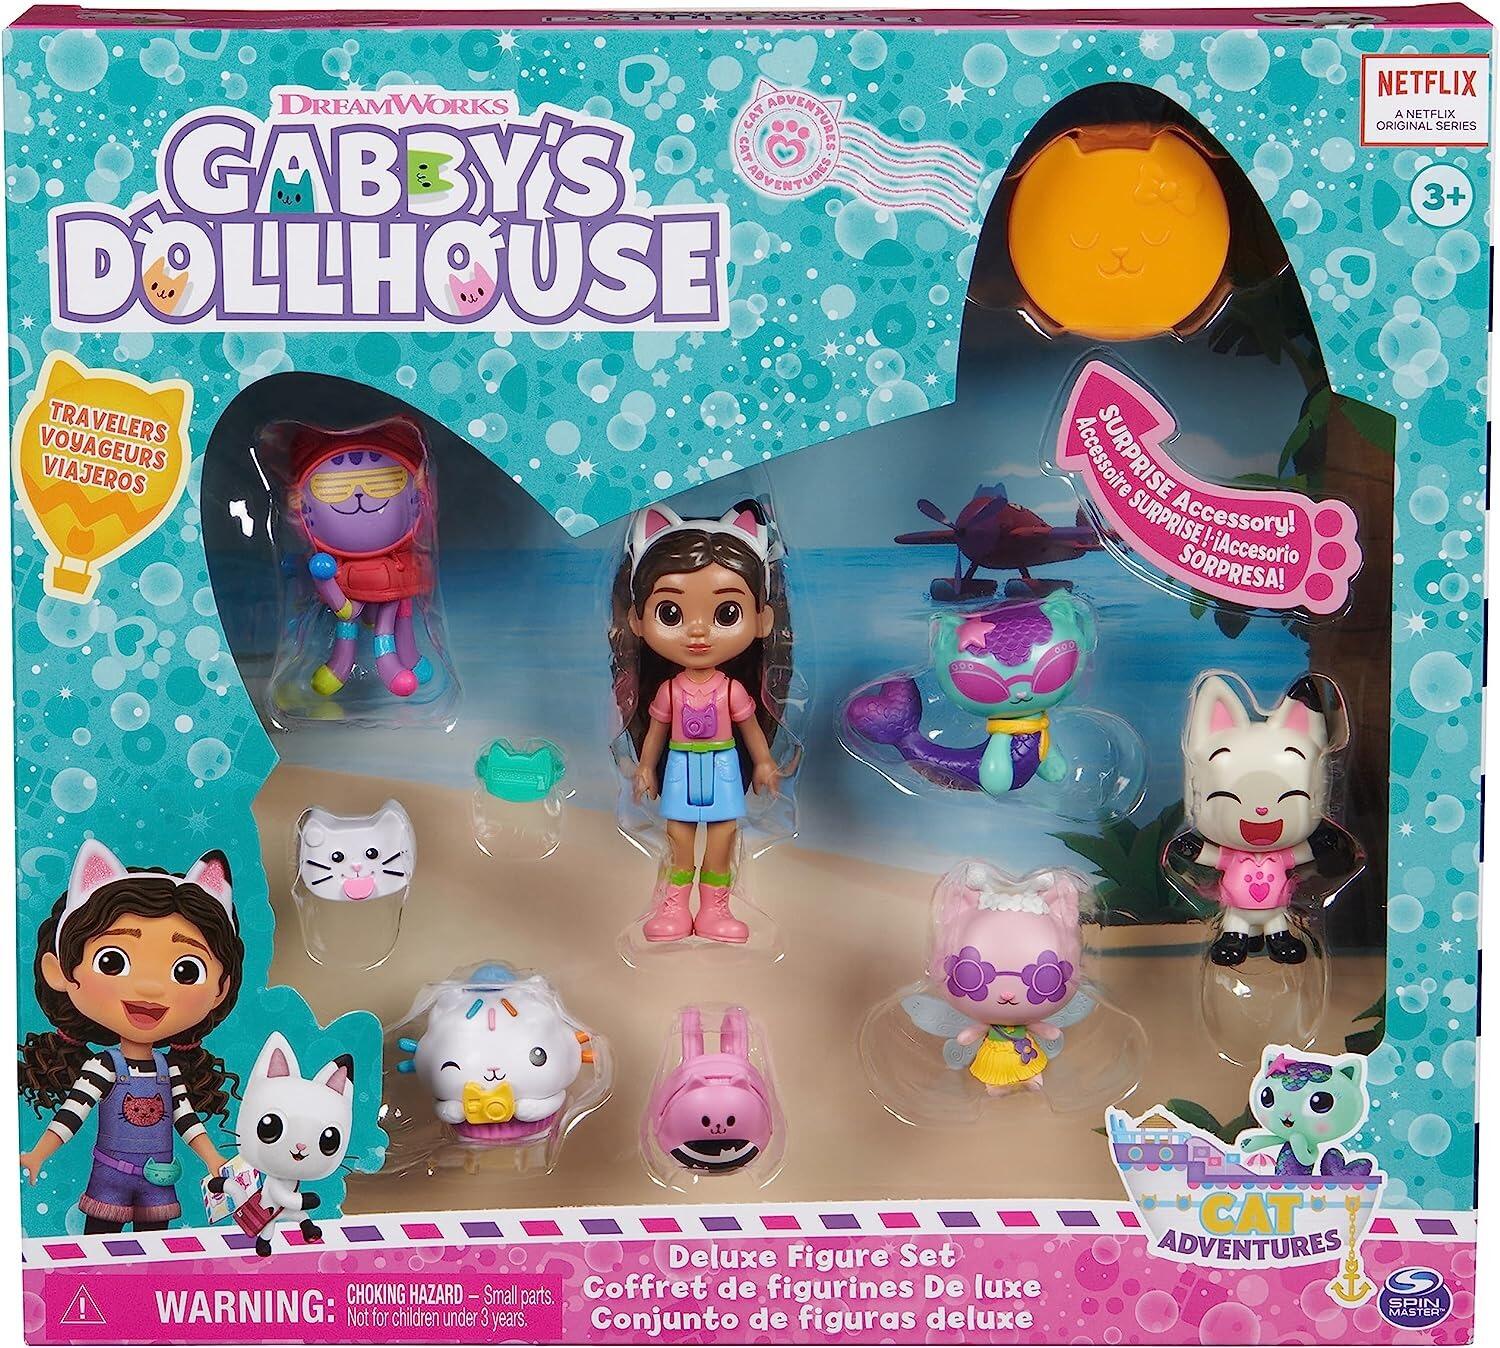 Gabby's Dollhouse, Travel Themed Figure Set